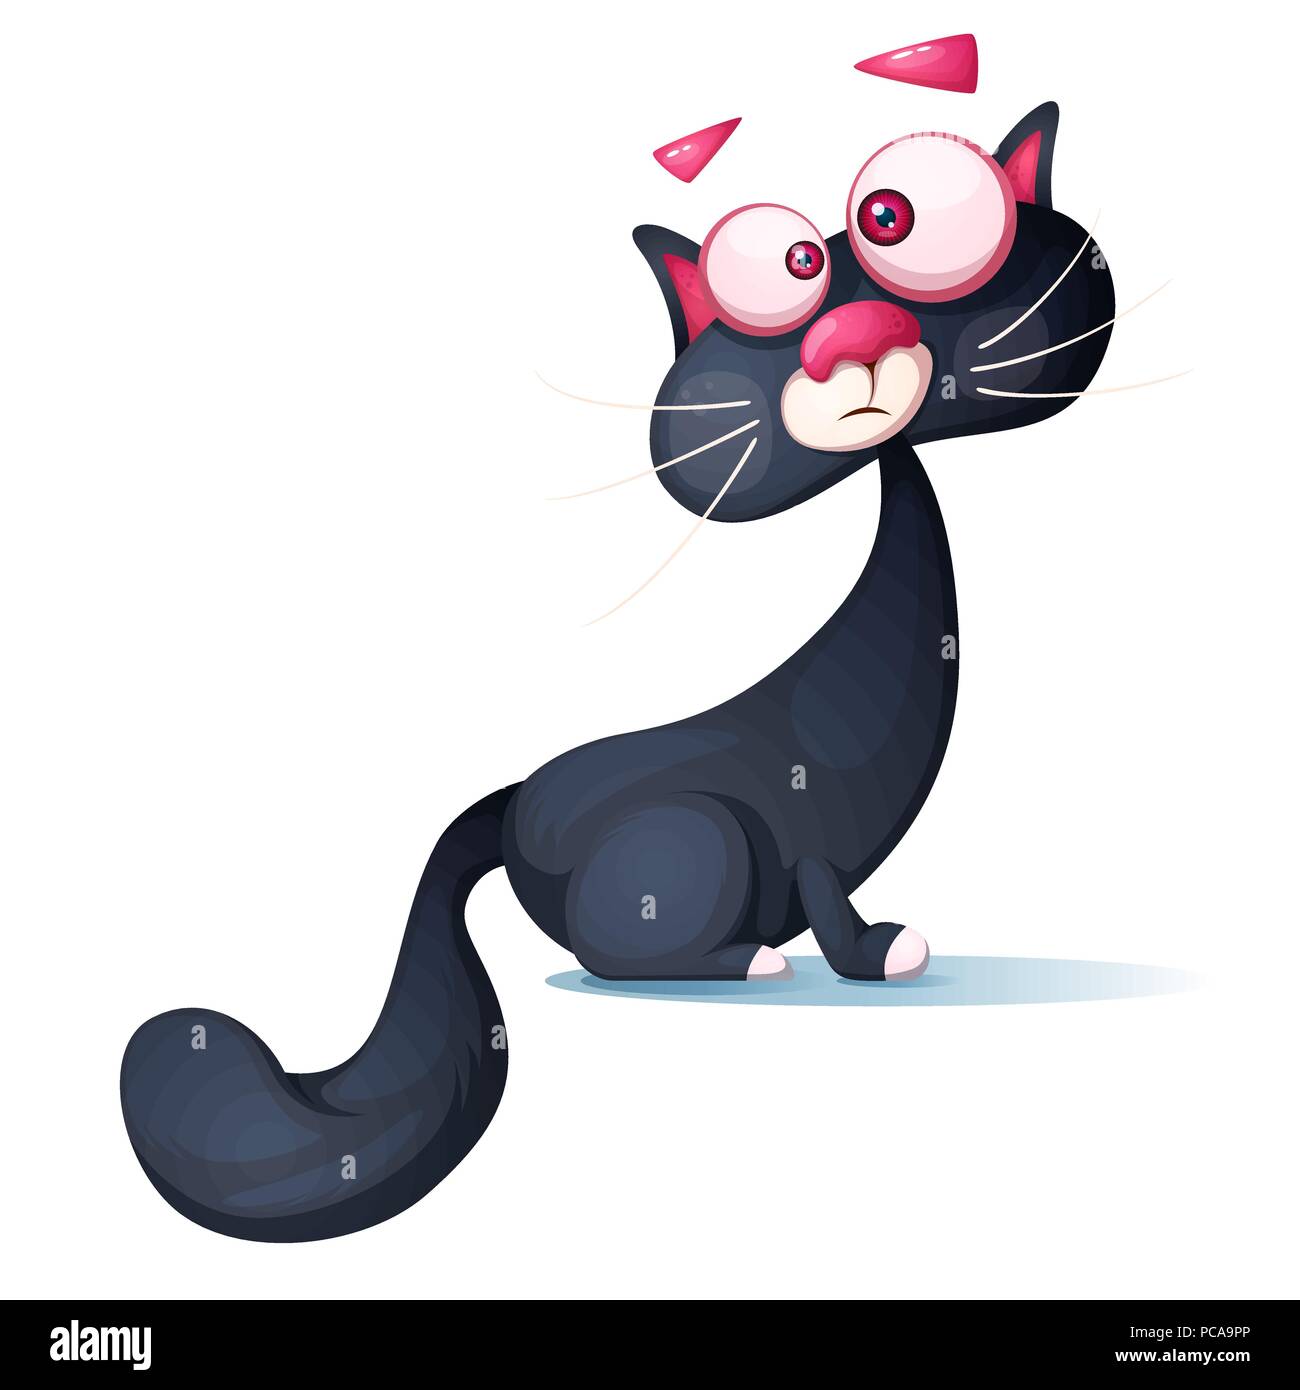 Funny cute, crazy cat cartoon illustration. Stock Vector